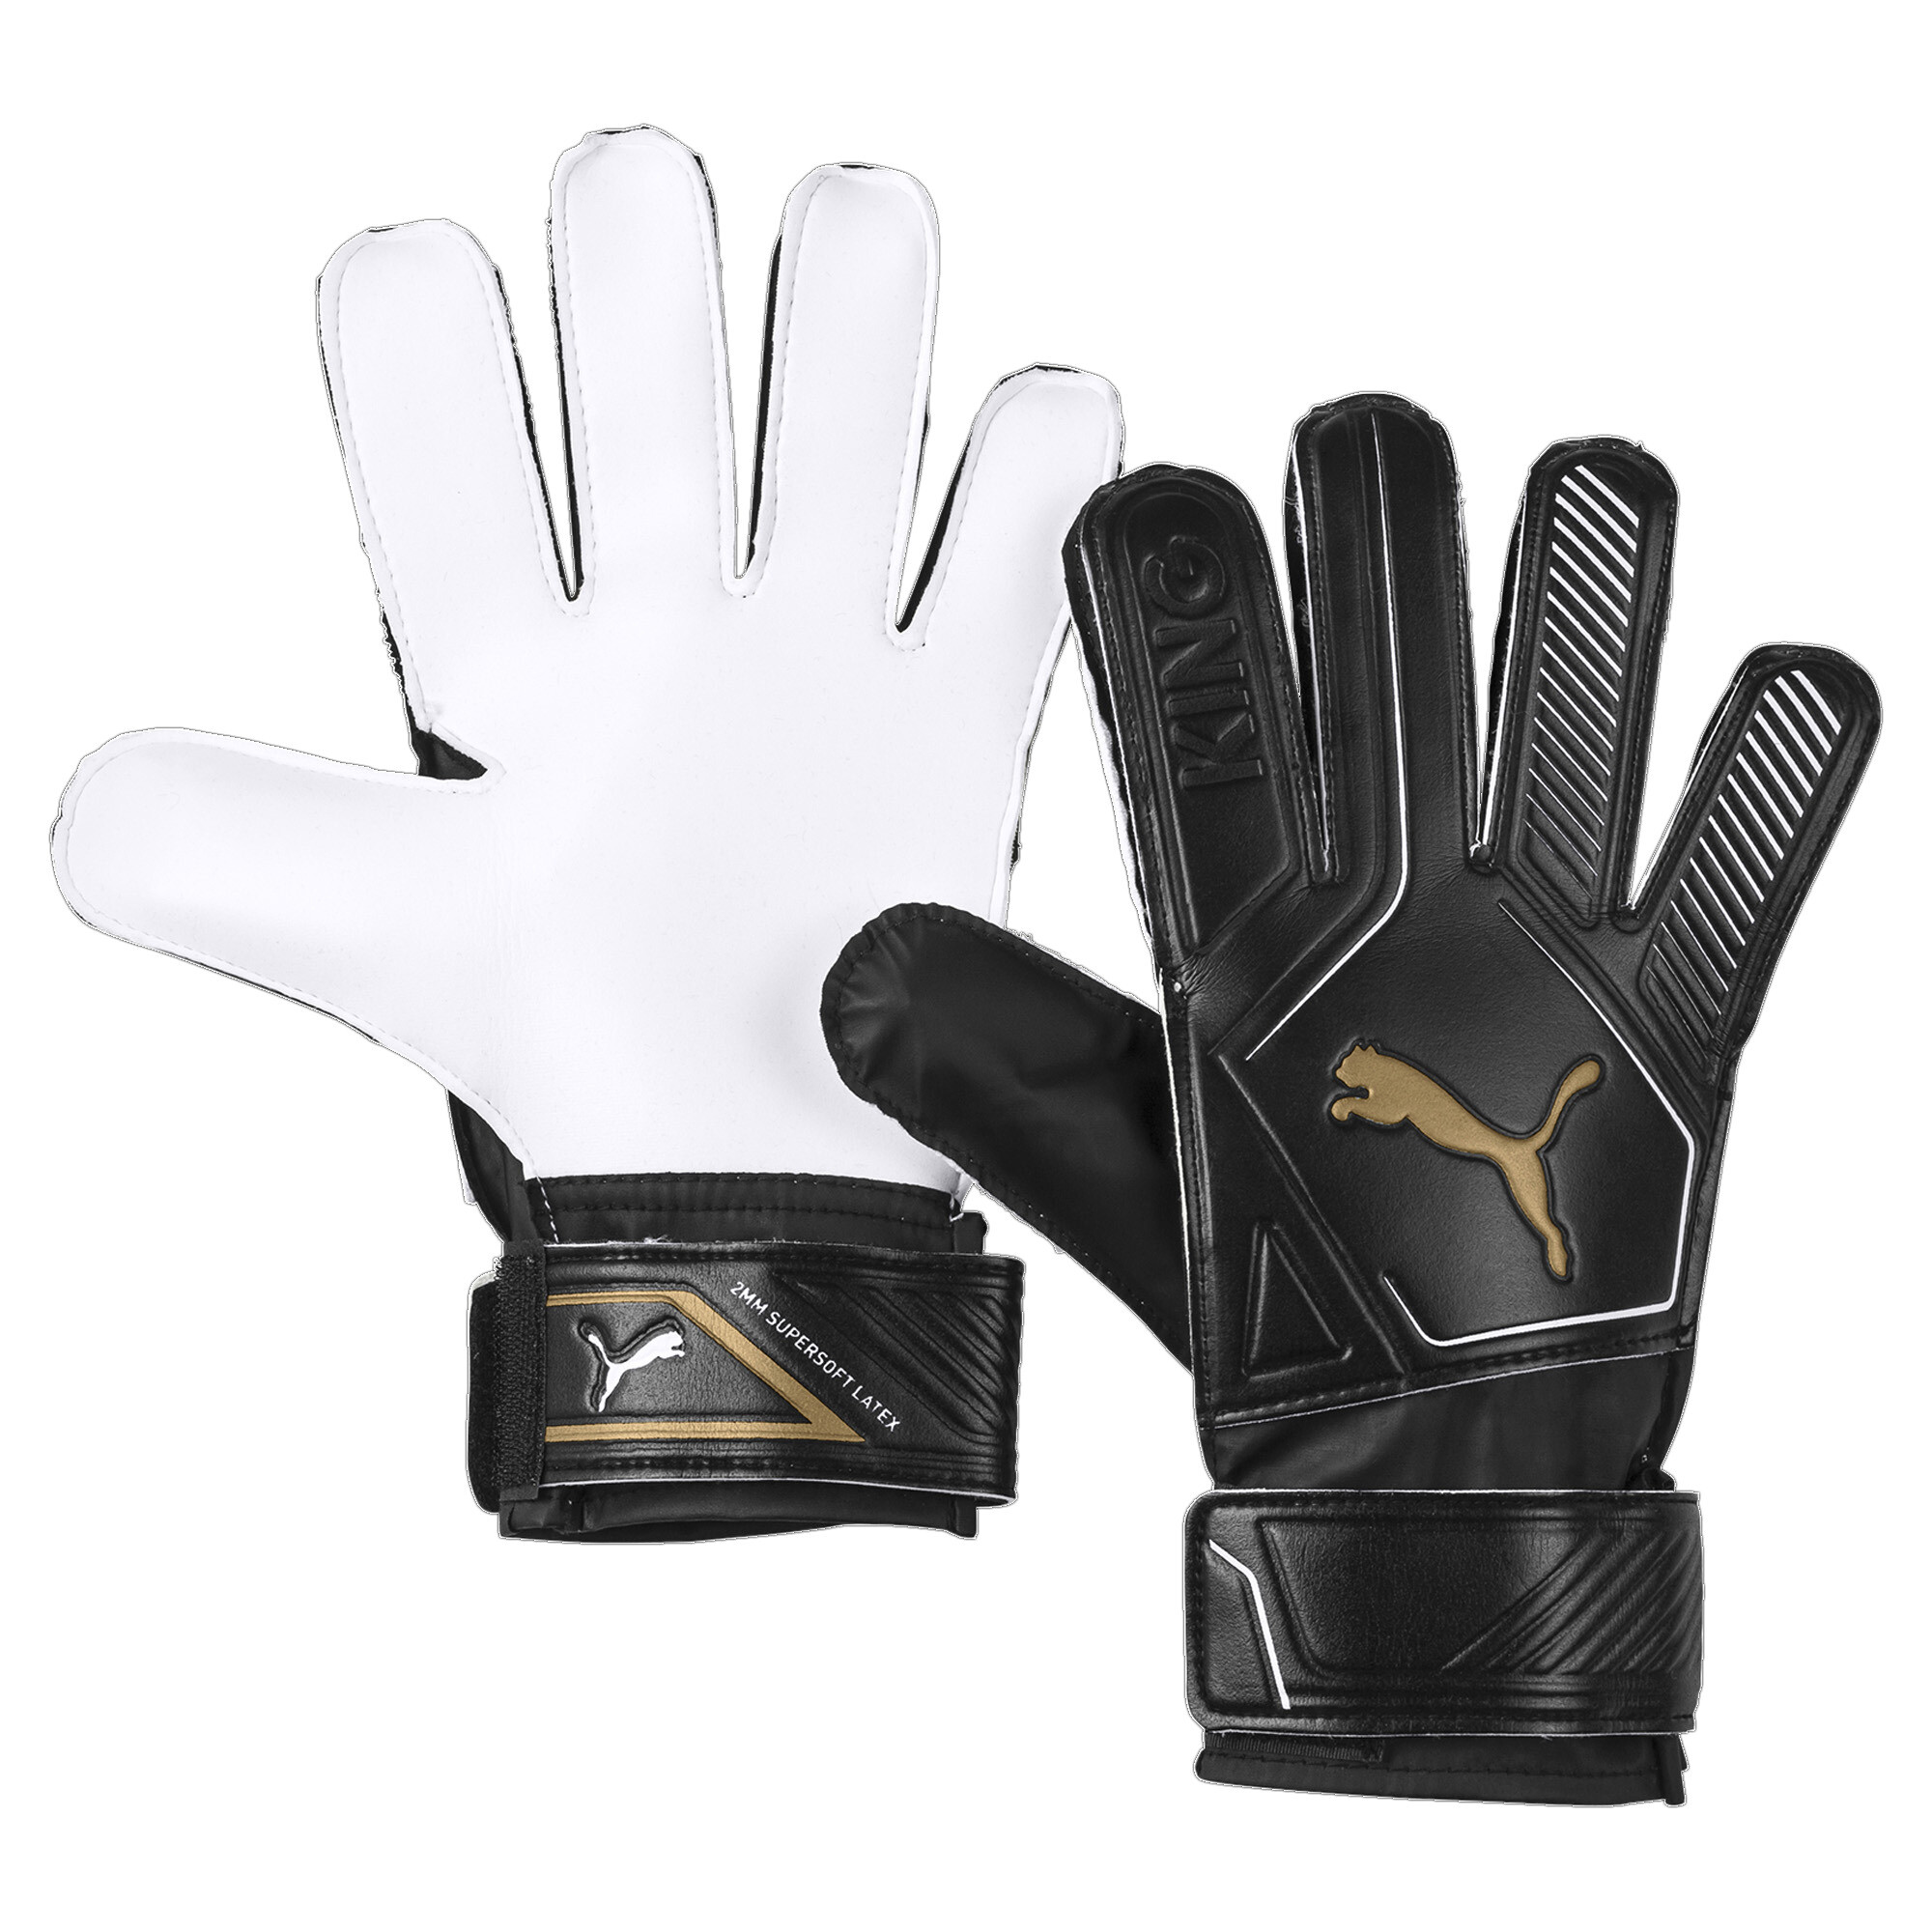 Puma King 4 Goalkeeper Gloves, Black, Size 8, Accessories